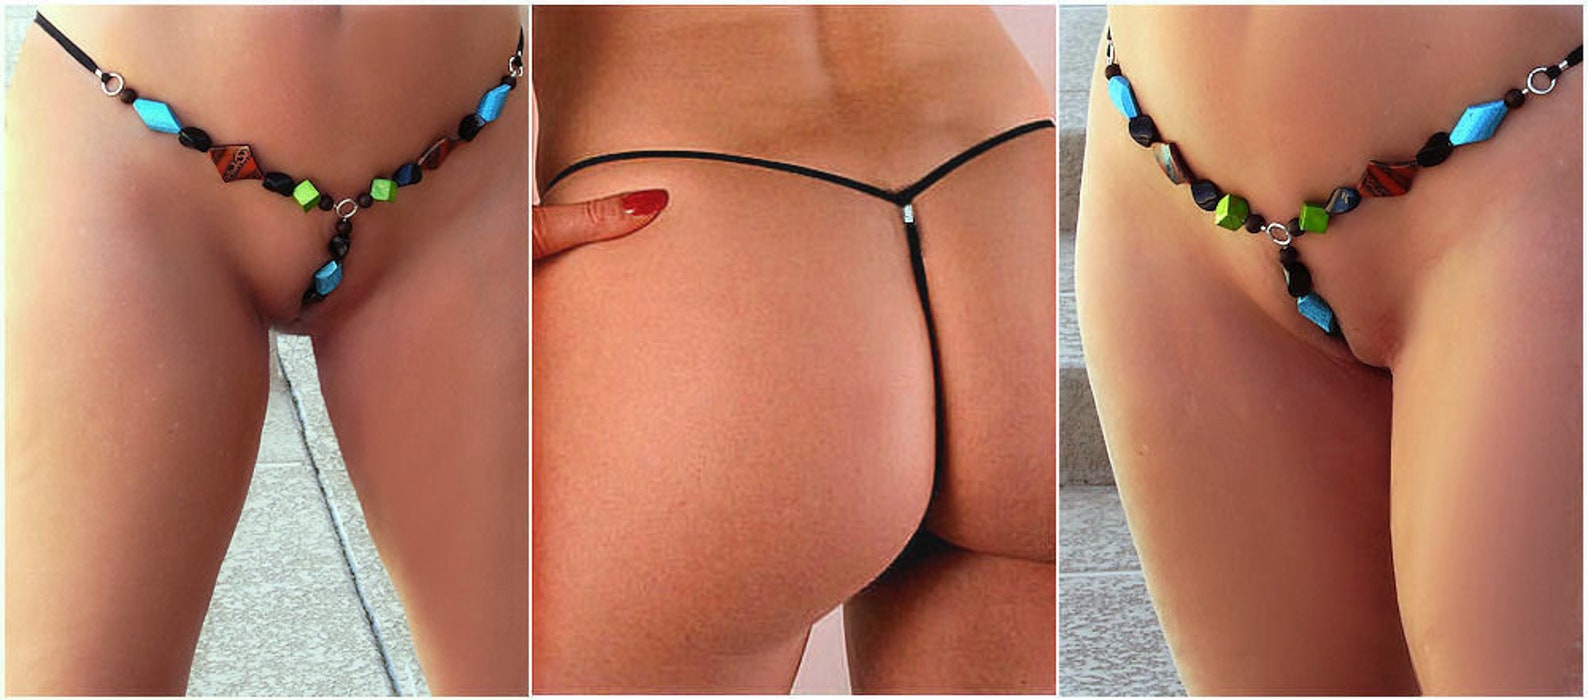 Dubio Bikini DLB-14 Crotchless Extreme Bikini G-String Beade. 